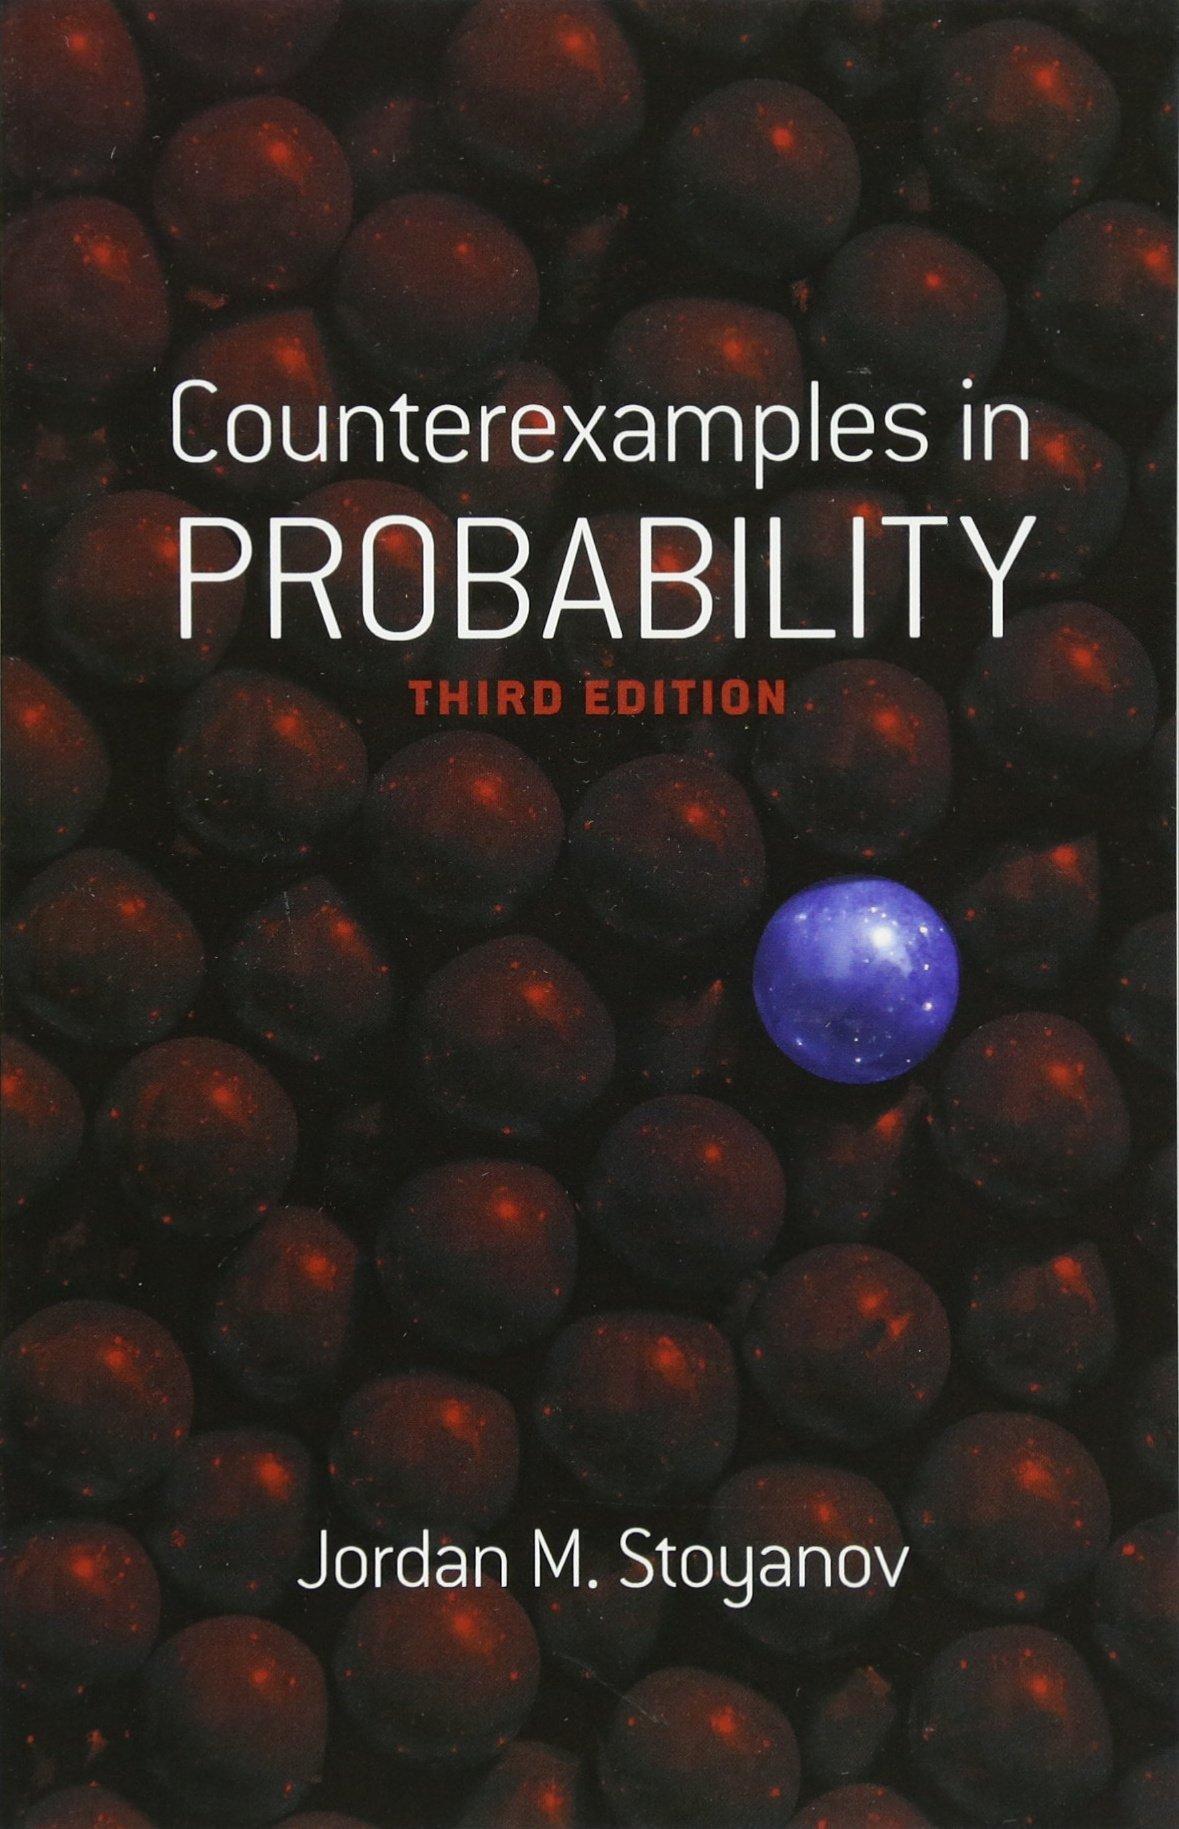 counterexamples in probability 3rd edition jordan m. stoyanov 0486499987, 978-0486499987